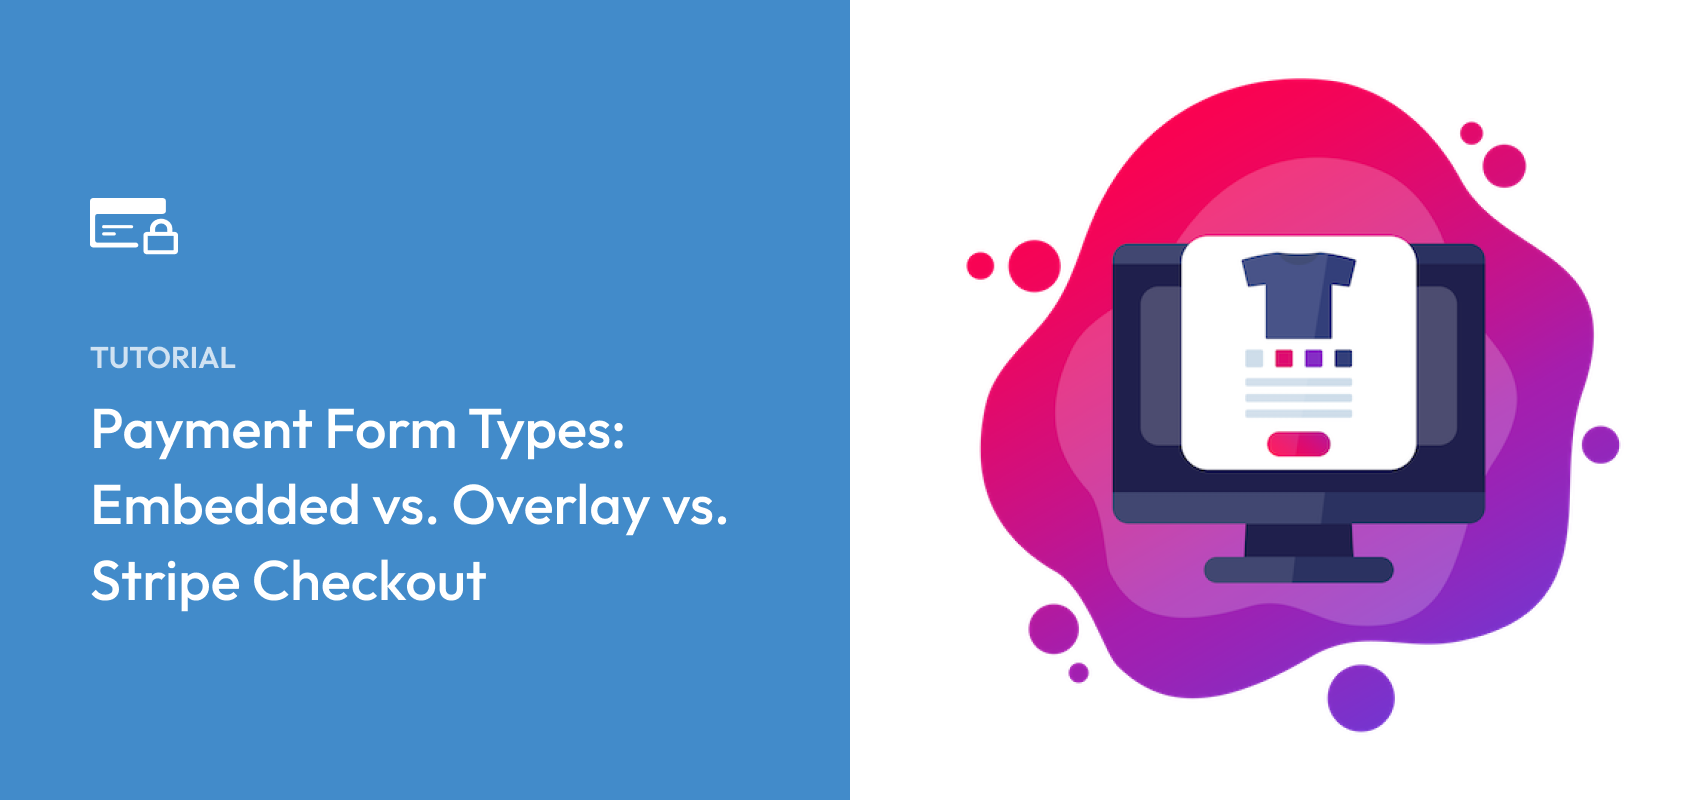 Payment Form Types: Embedded vs. Overlay vs. Stripe Checkout